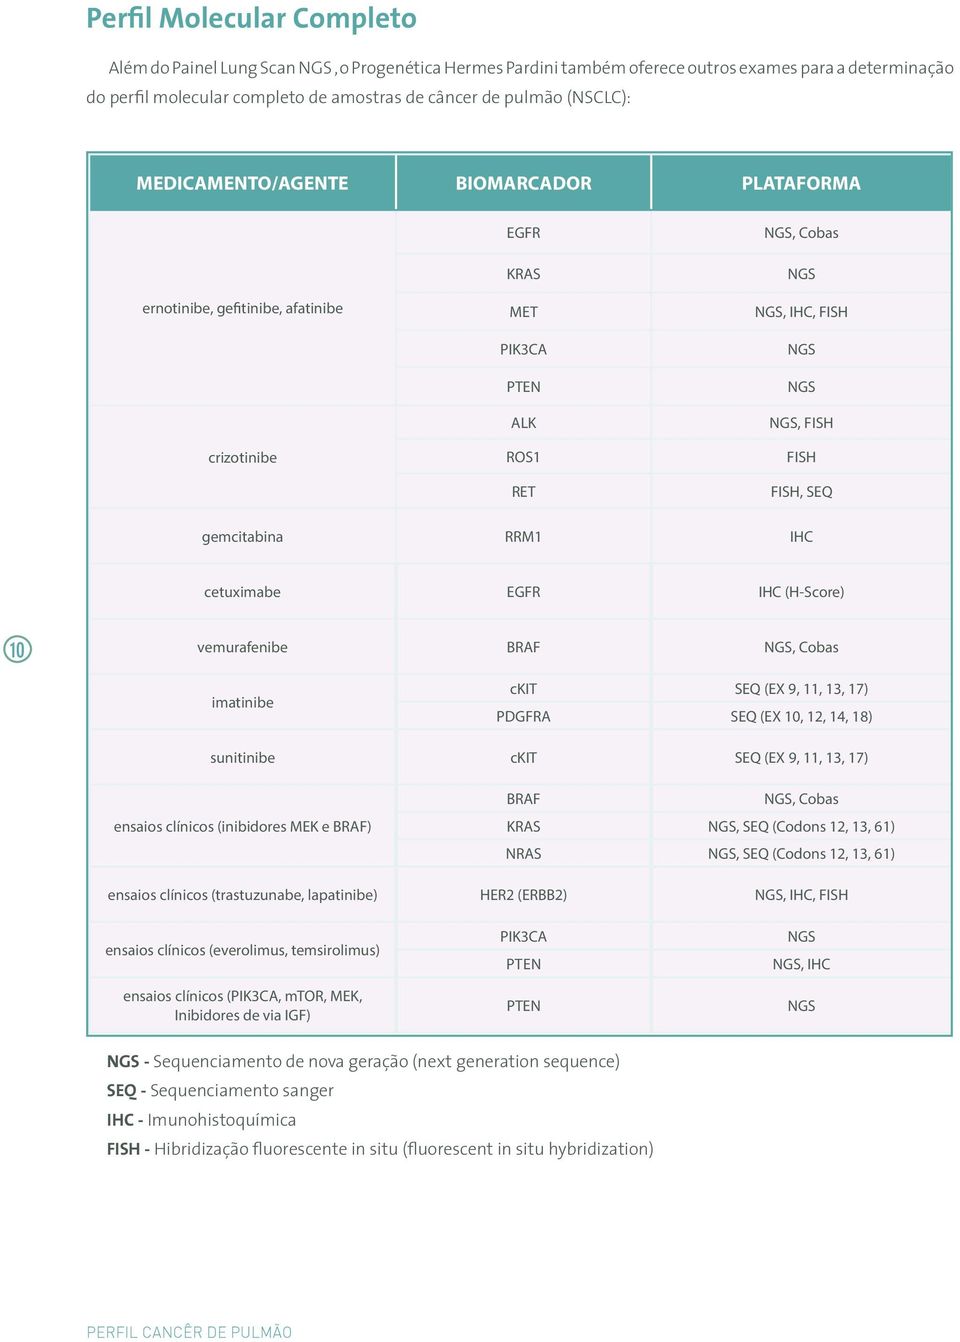 gemcitabina RRM1 IHC cetuximabe EGFR IHC (H-Score) 10 vemurafenibe BRAF NGS, Cobas imatinibe ckit SEQ (EX 9, 11, 13, 17) PDGFRA SEQ (EX 10, 12, 14, 18) sunitinibe ckit SEQ (EX 9, 11, 13, 17) ensaios